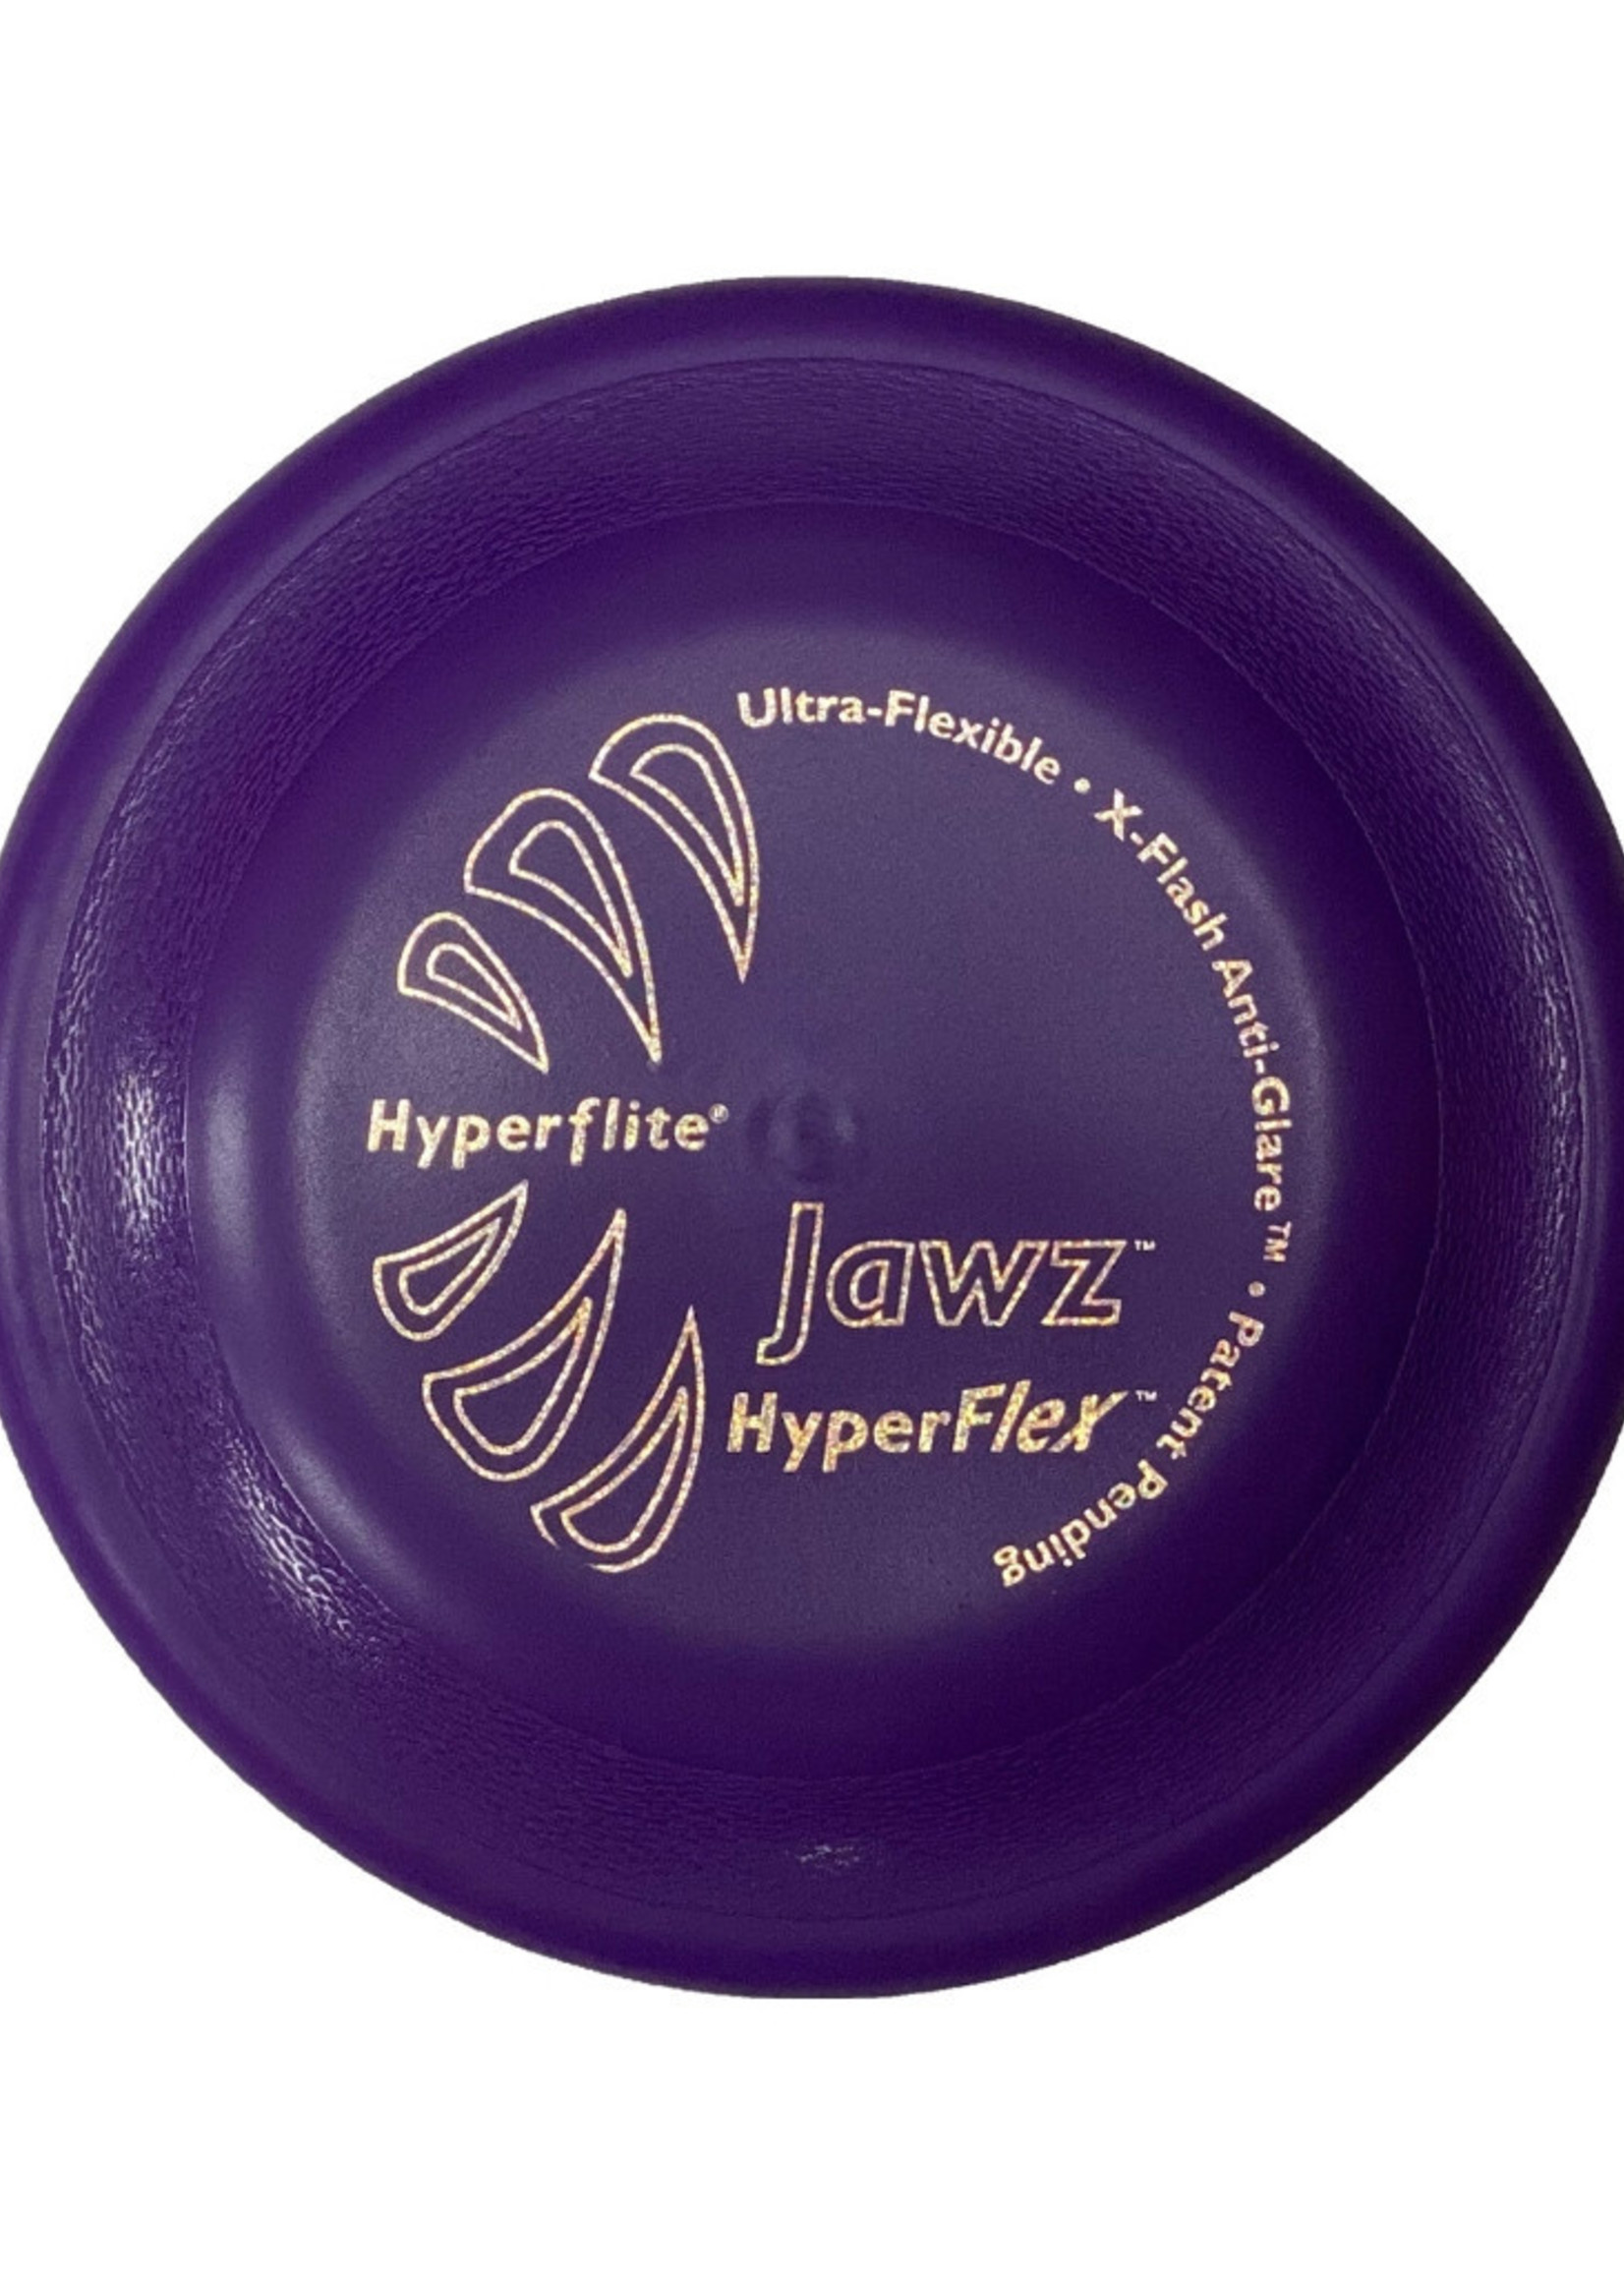 Jaws Jawz Hyperflite Flying Discs